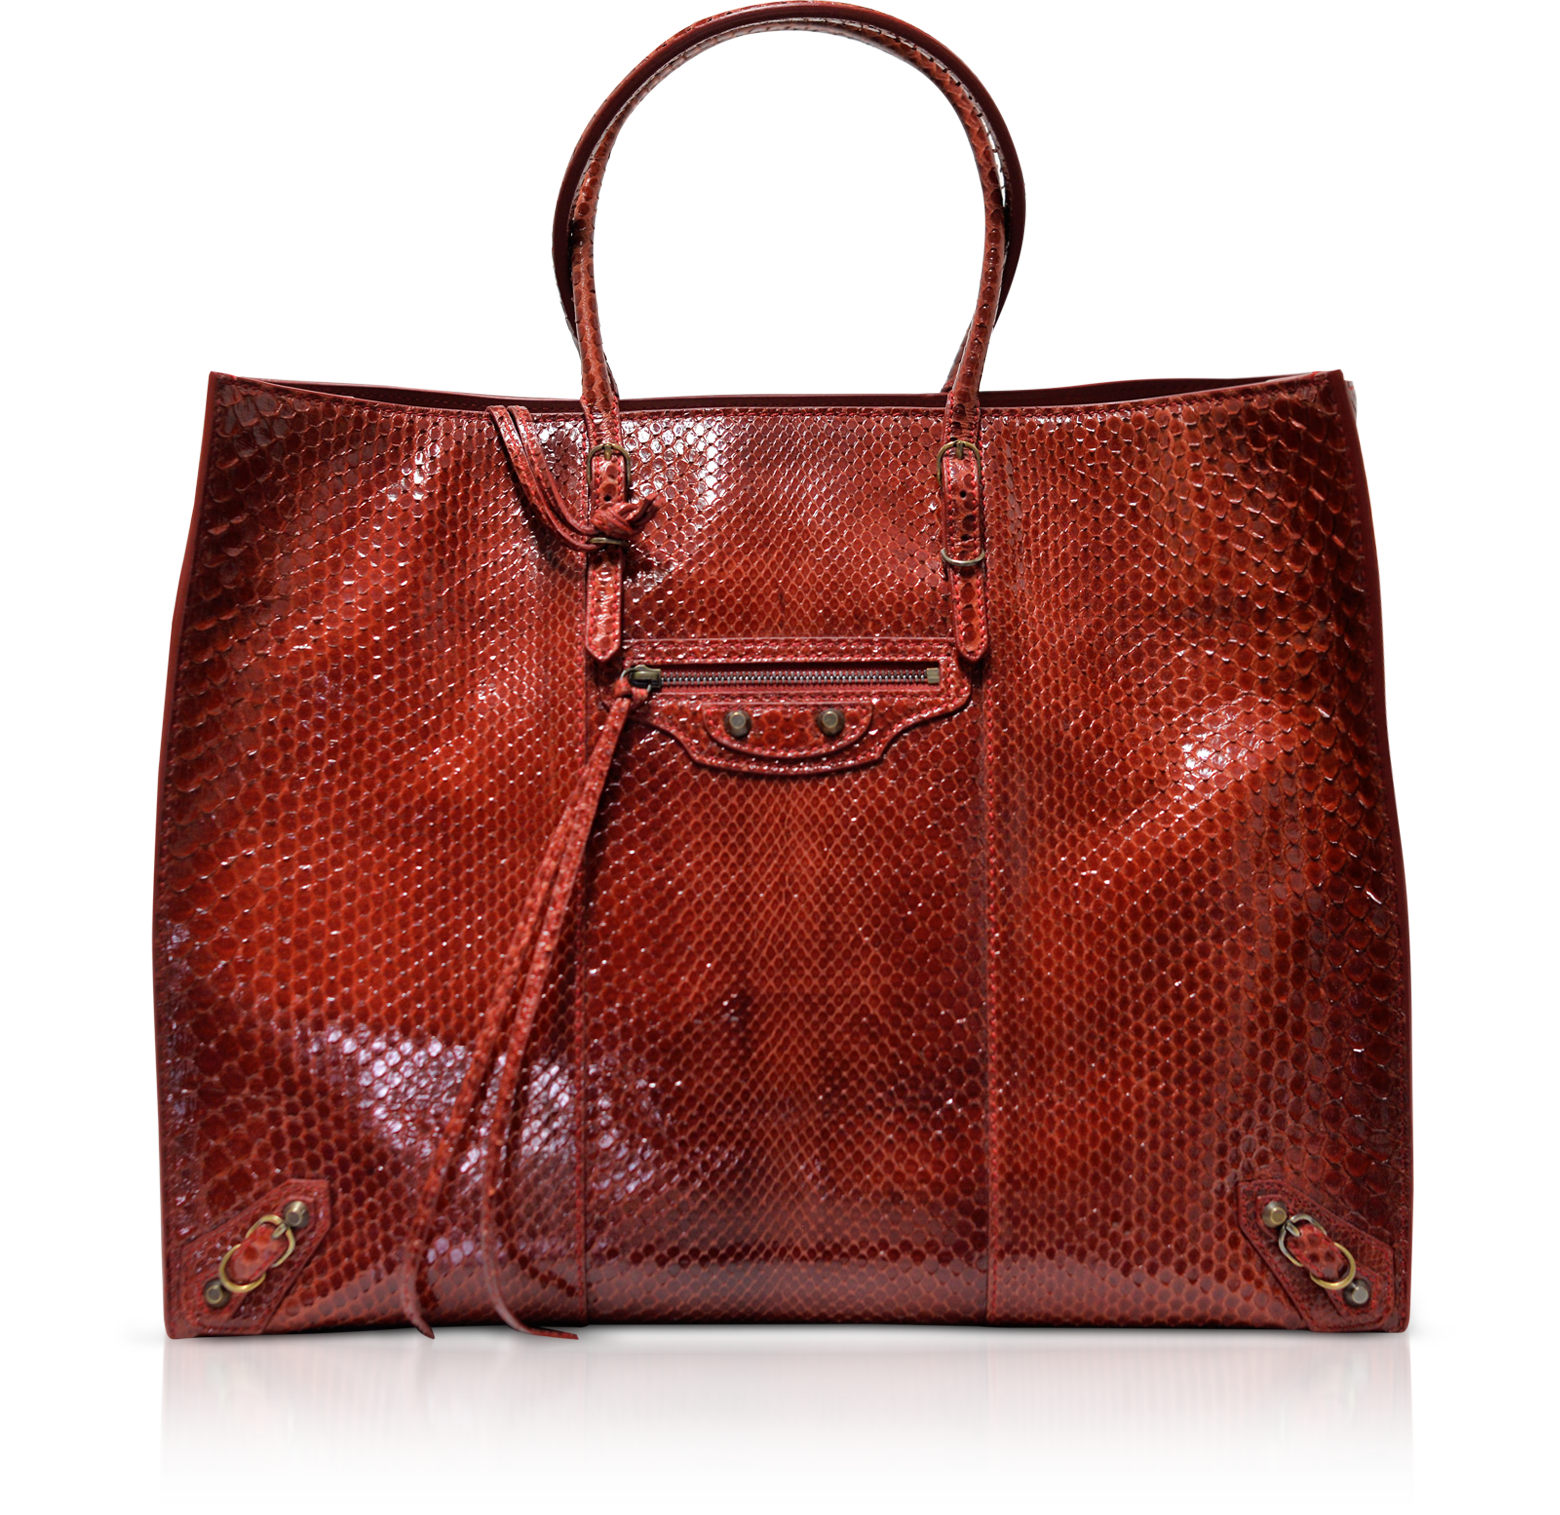 Balenciaga Red Python Leather Papier A4 Tote Bag at FORZIERI